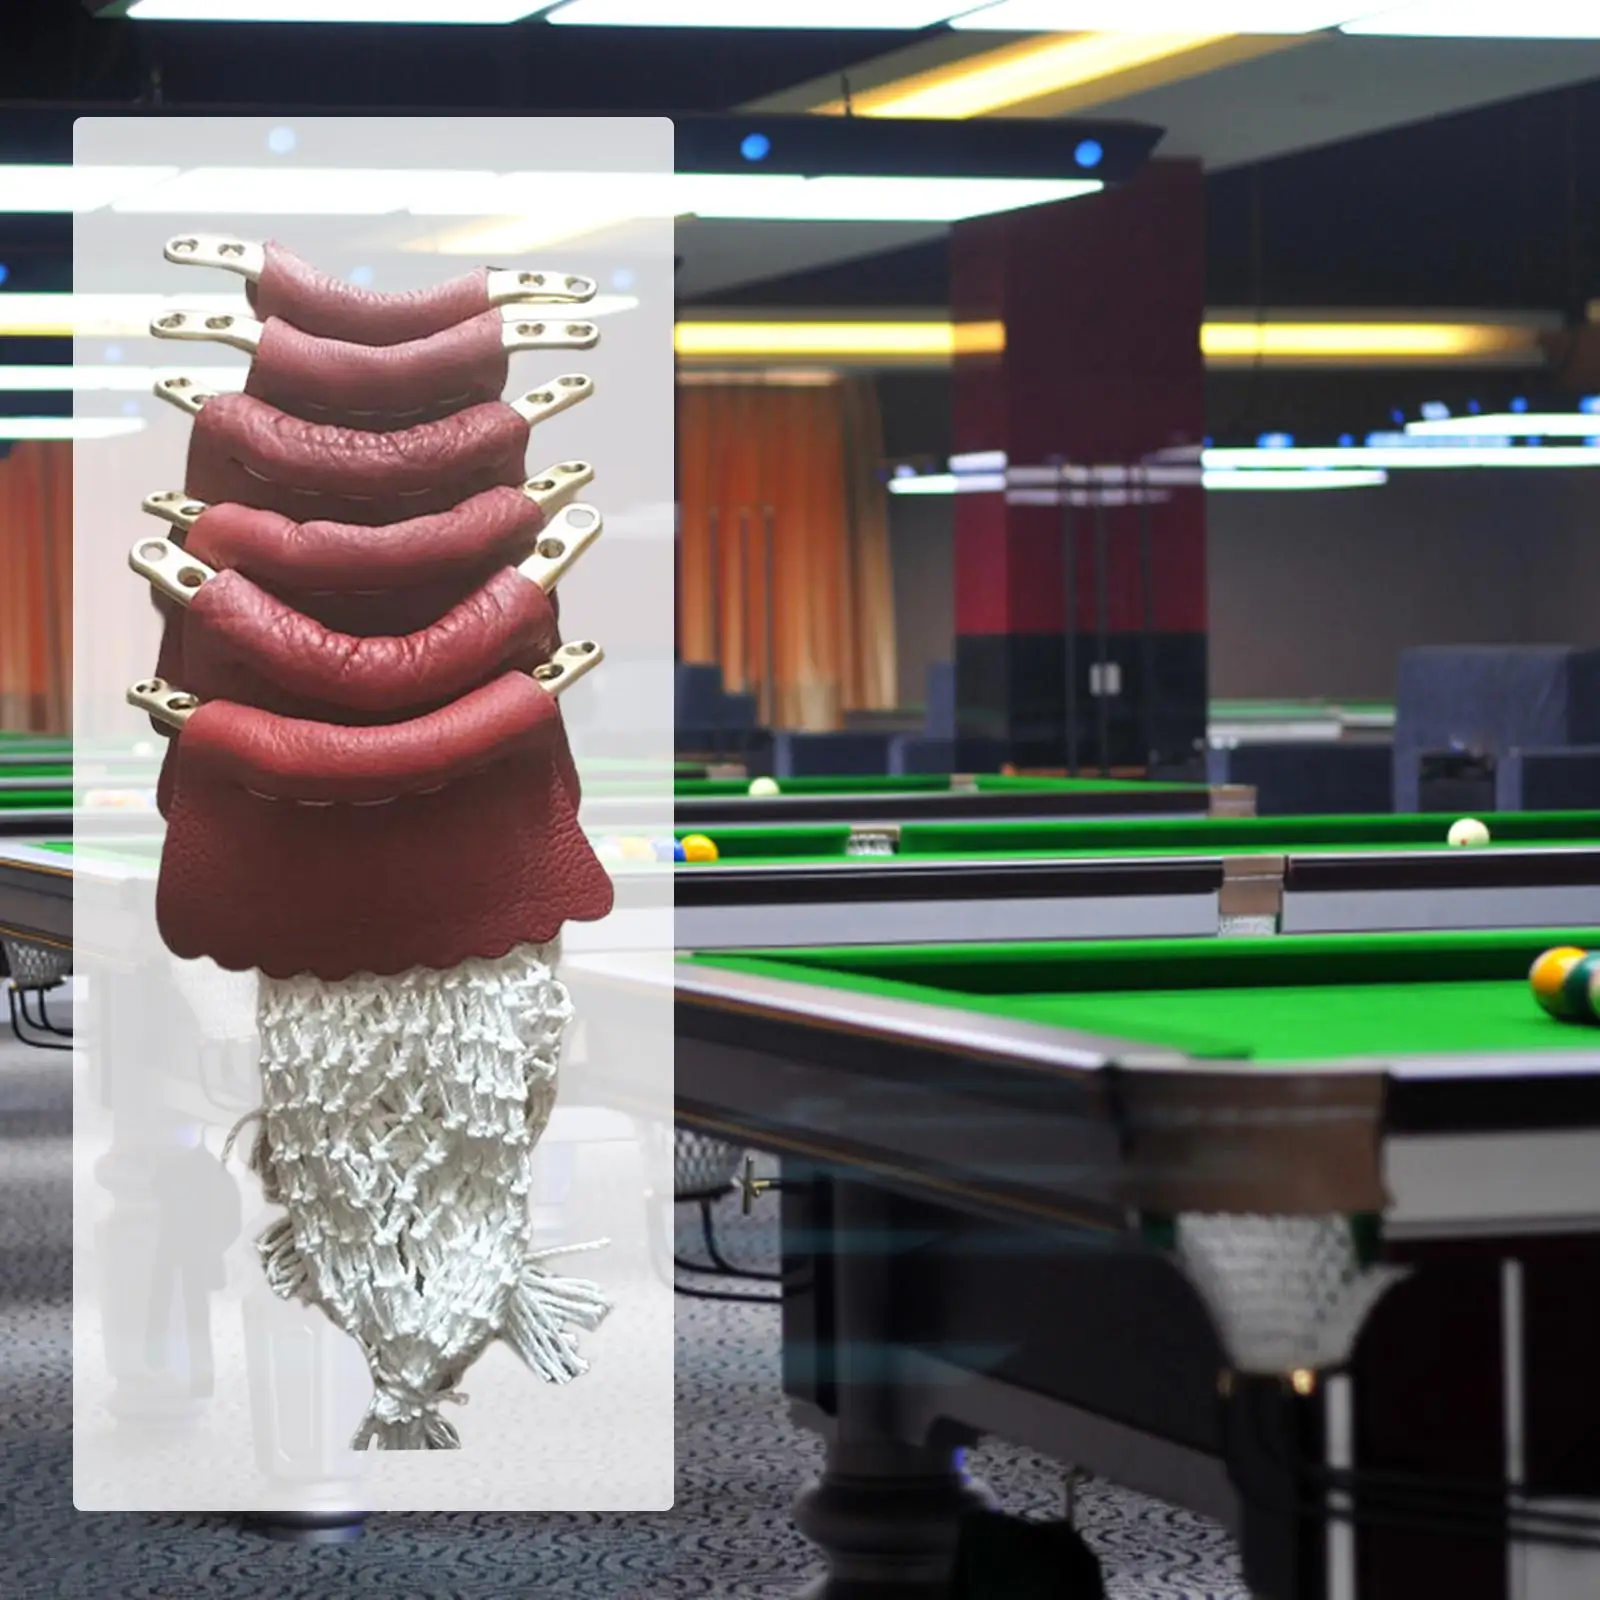 Snooker Pocket Nets 6Pcs/Set Replacement Heavy Duty Billiard Accessories, Billiards Mesh Bag Billiard Pool Table Pockets